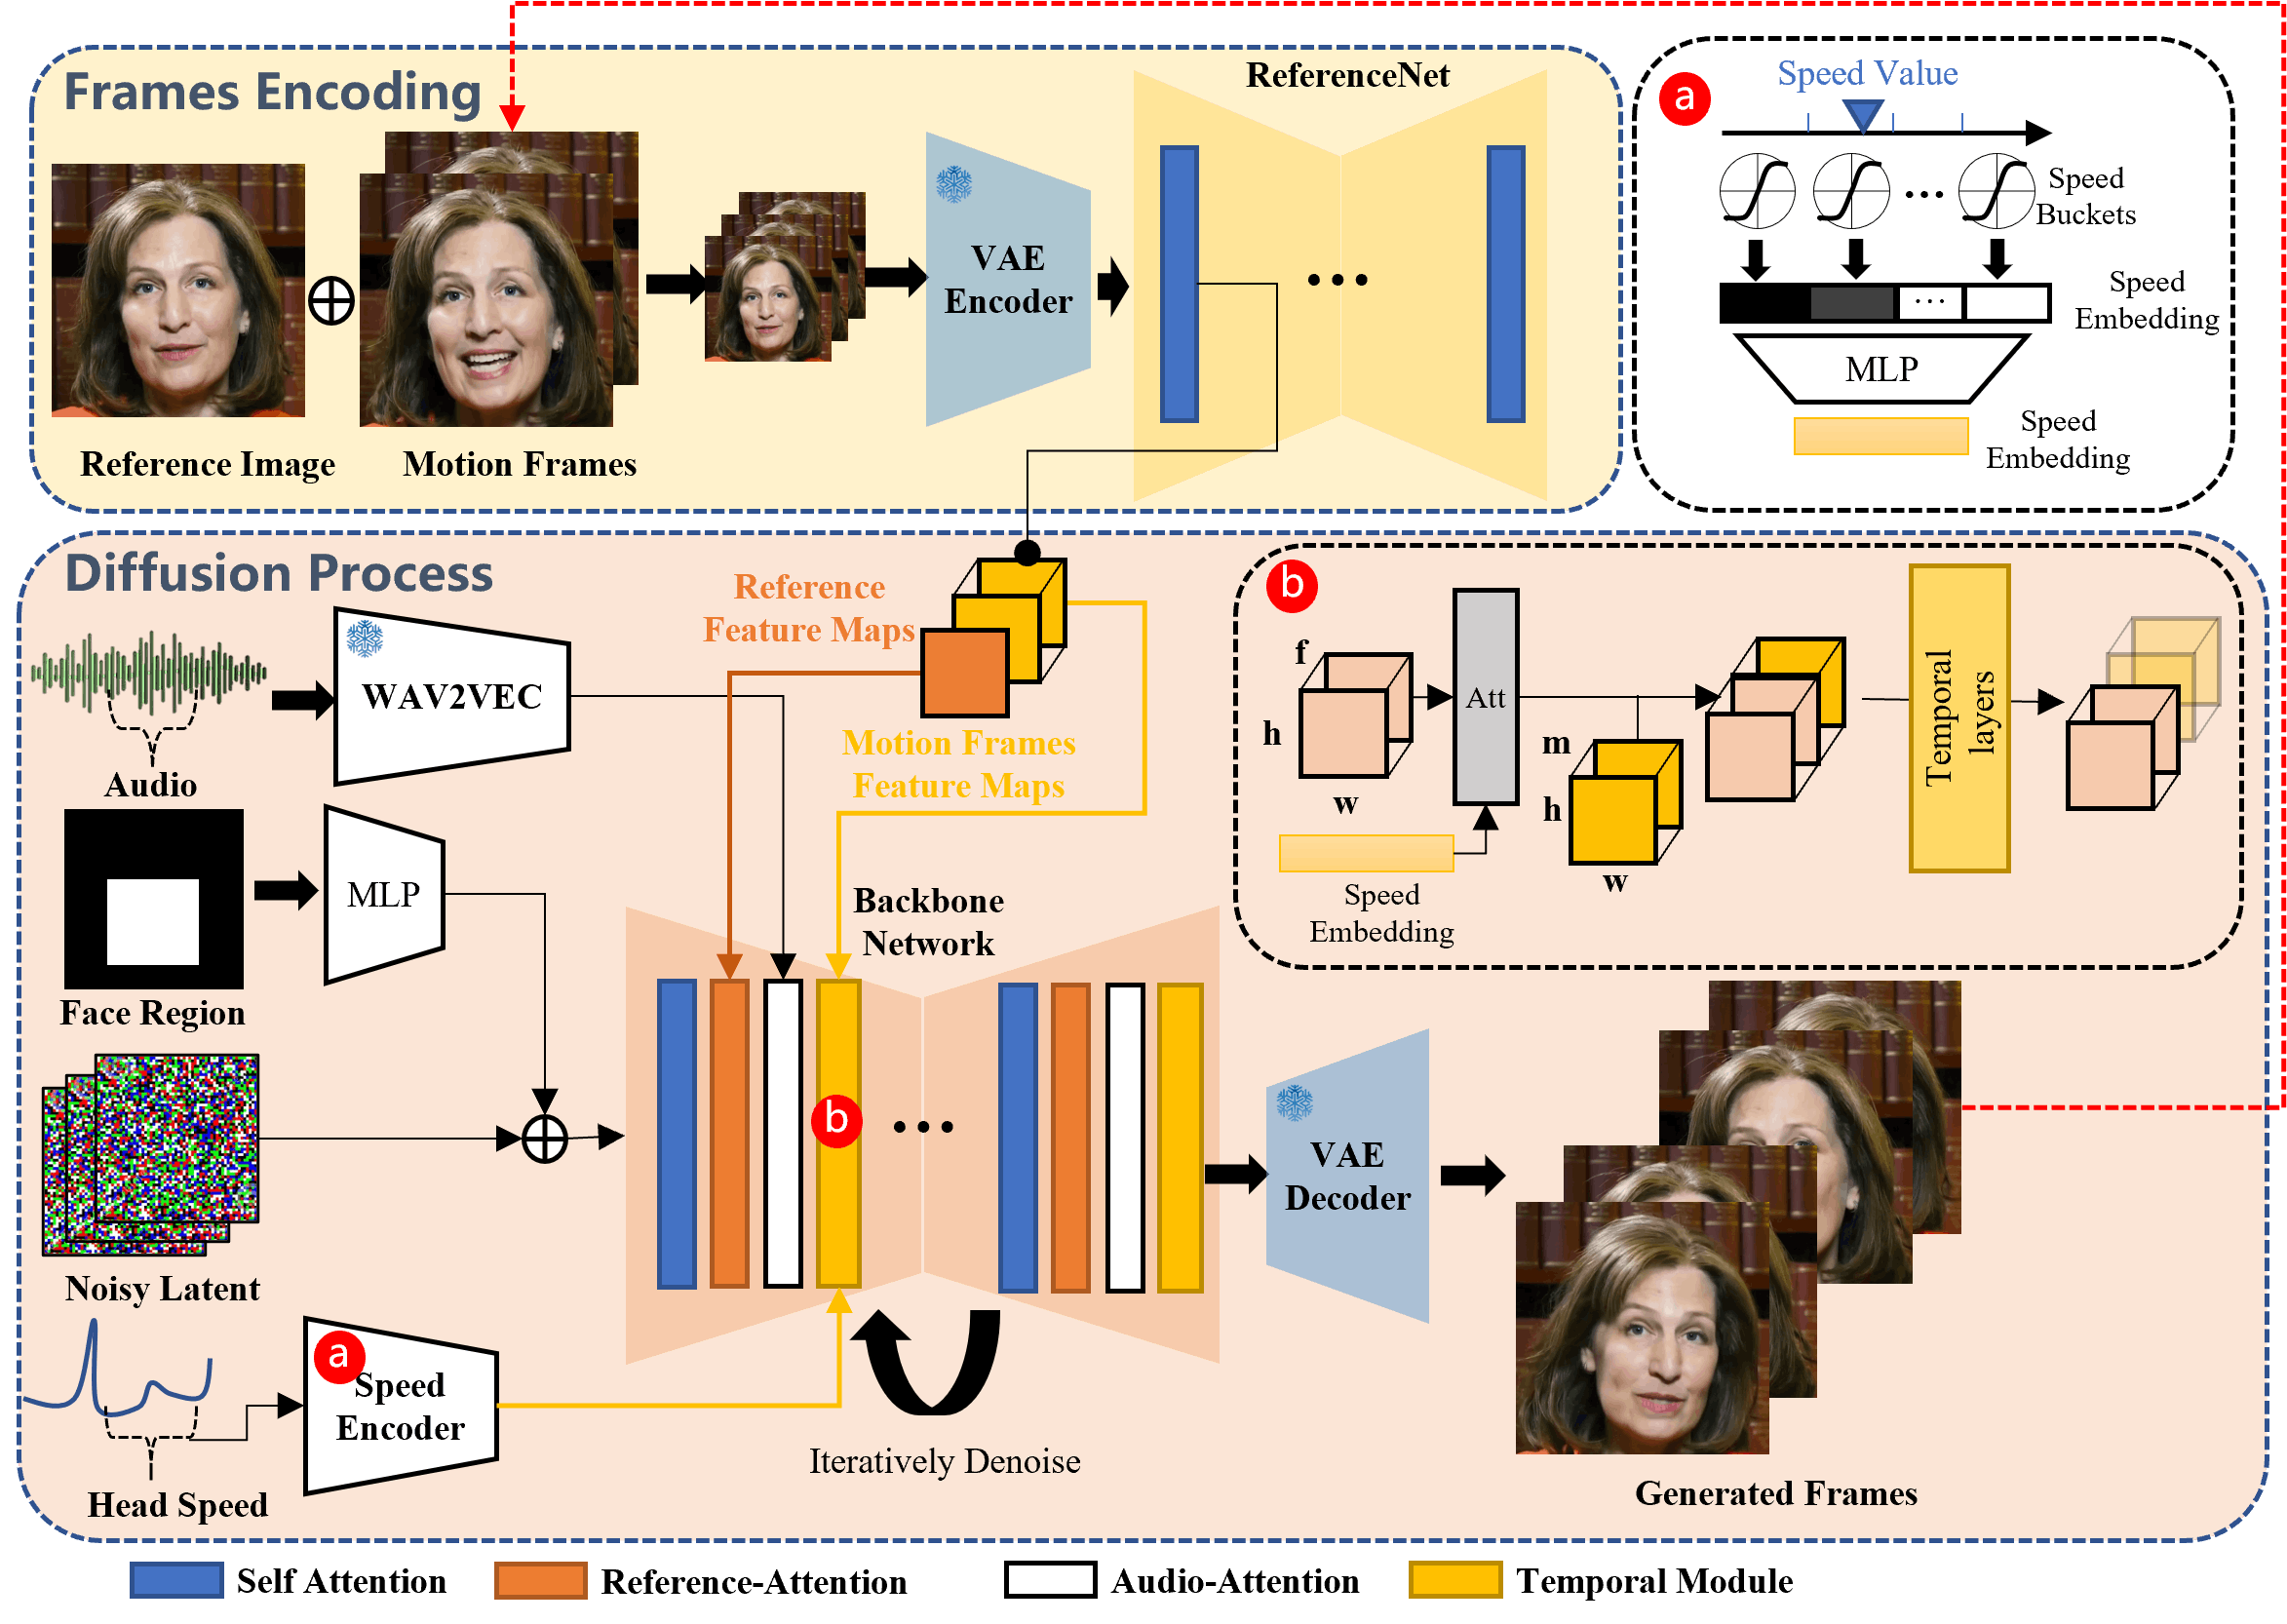 Frames Encoding Method: EMO - Source(https://humanaigc.github.io/emote-portrait-alive/)